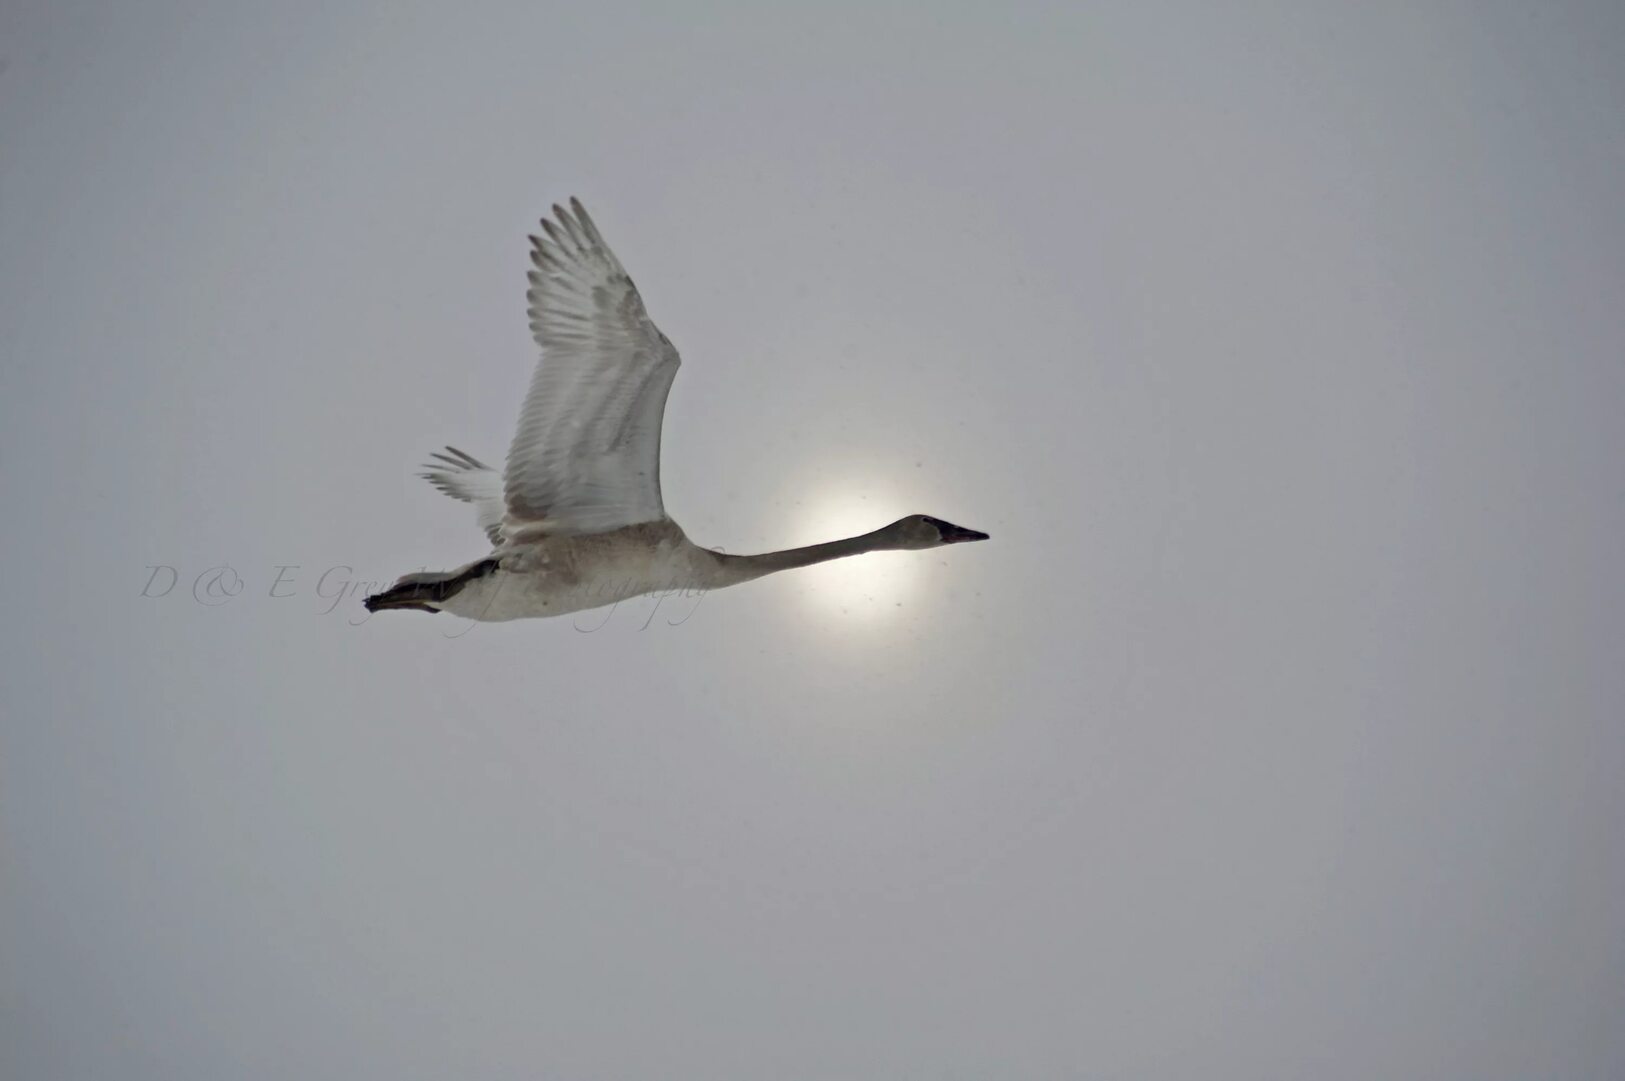 Я лечу к тебе белым лебедем лещенко. Лебедь в полете. Лебеди летят. Лебеди в небе. Лебедь летит вниз.